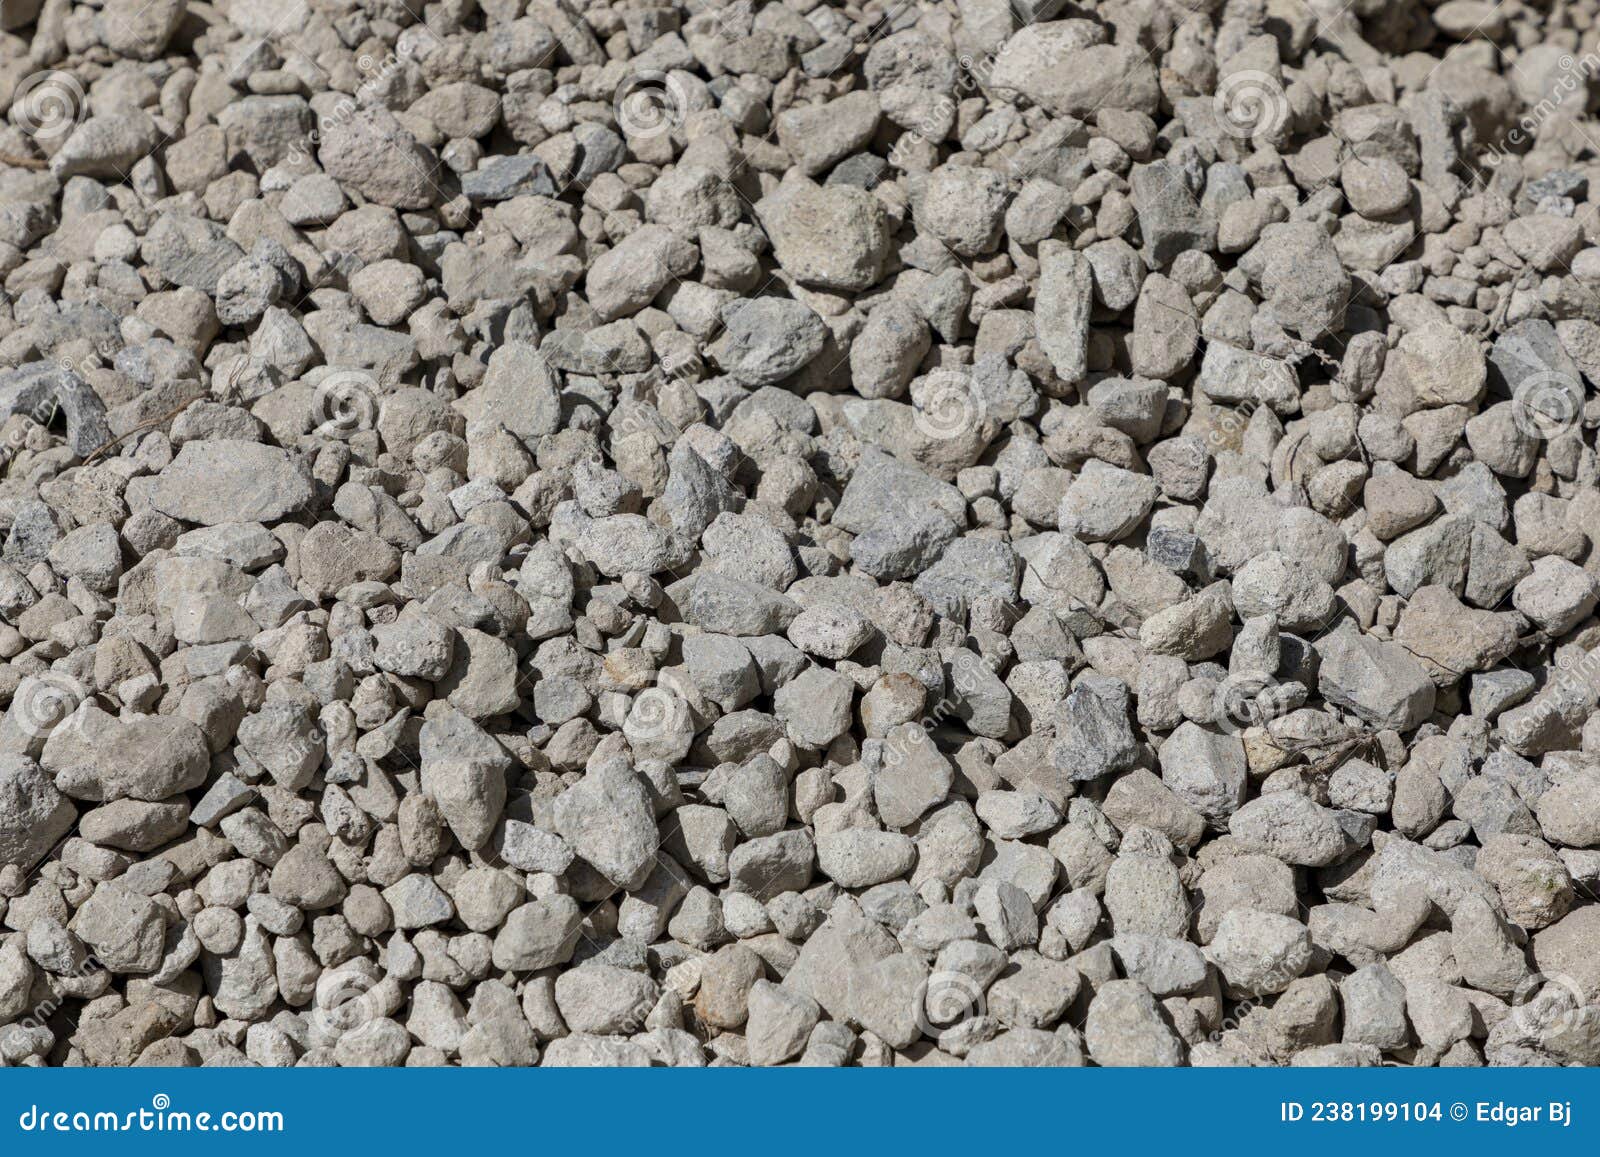 gravel texture or gray gravel under construction